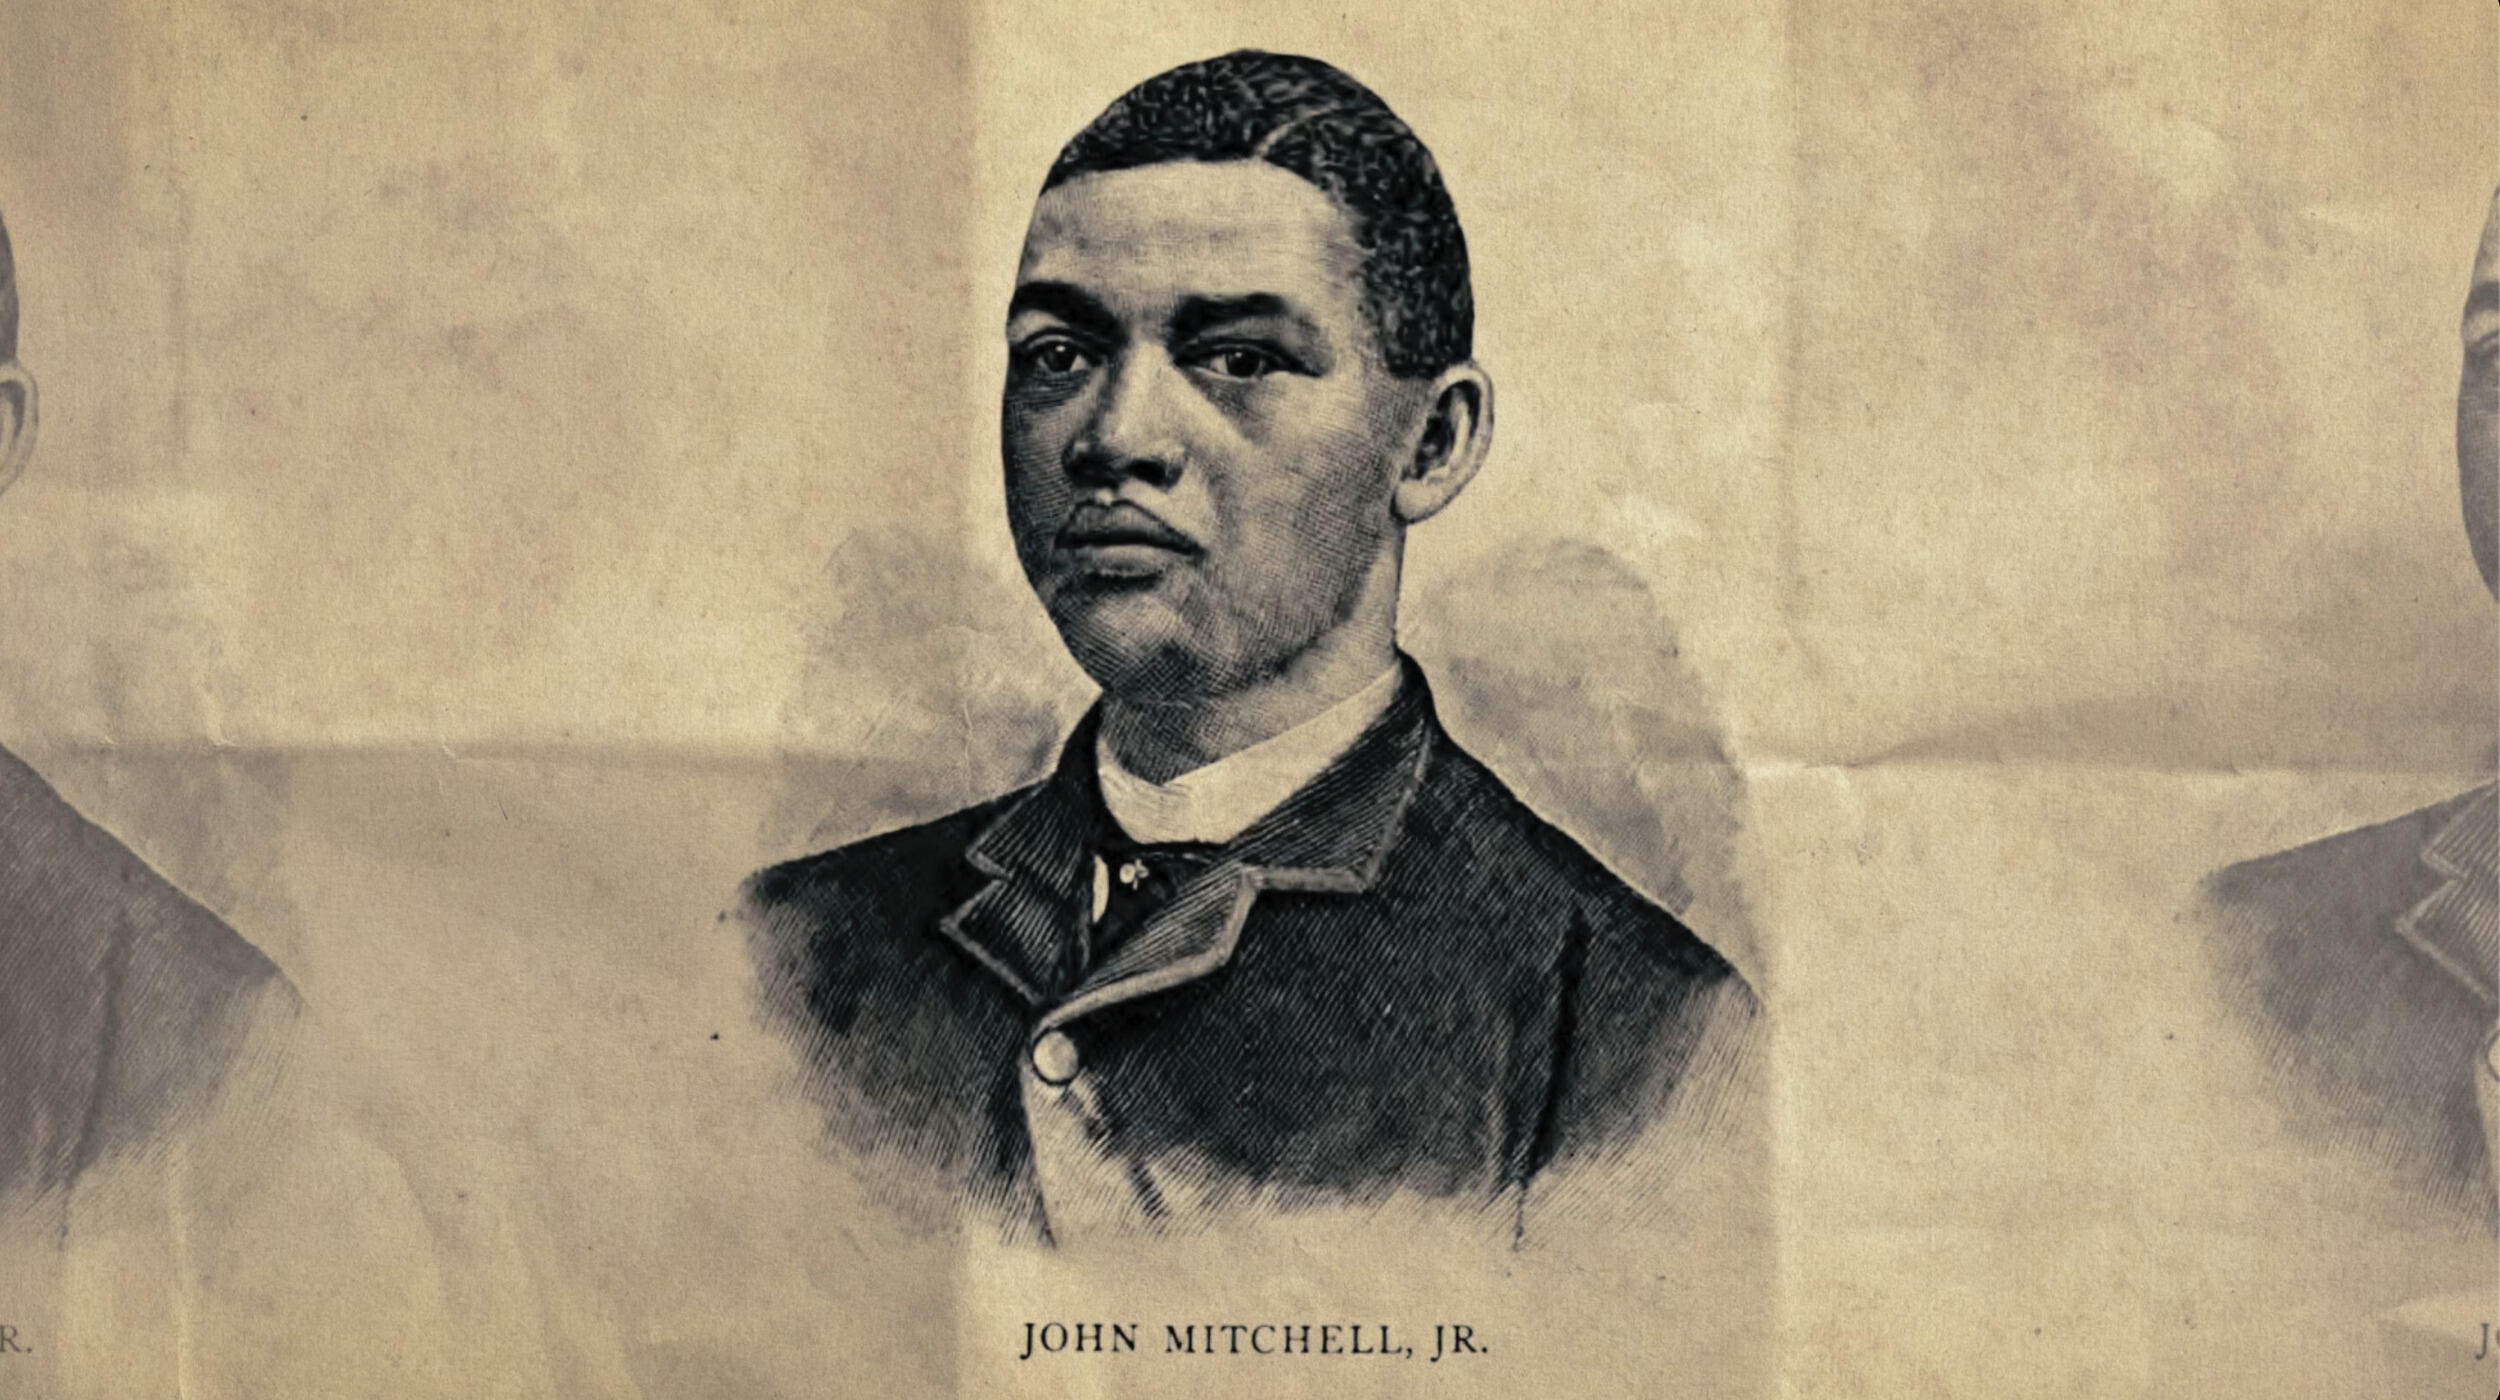 An illustrated portrait of John Mitchell Jr.